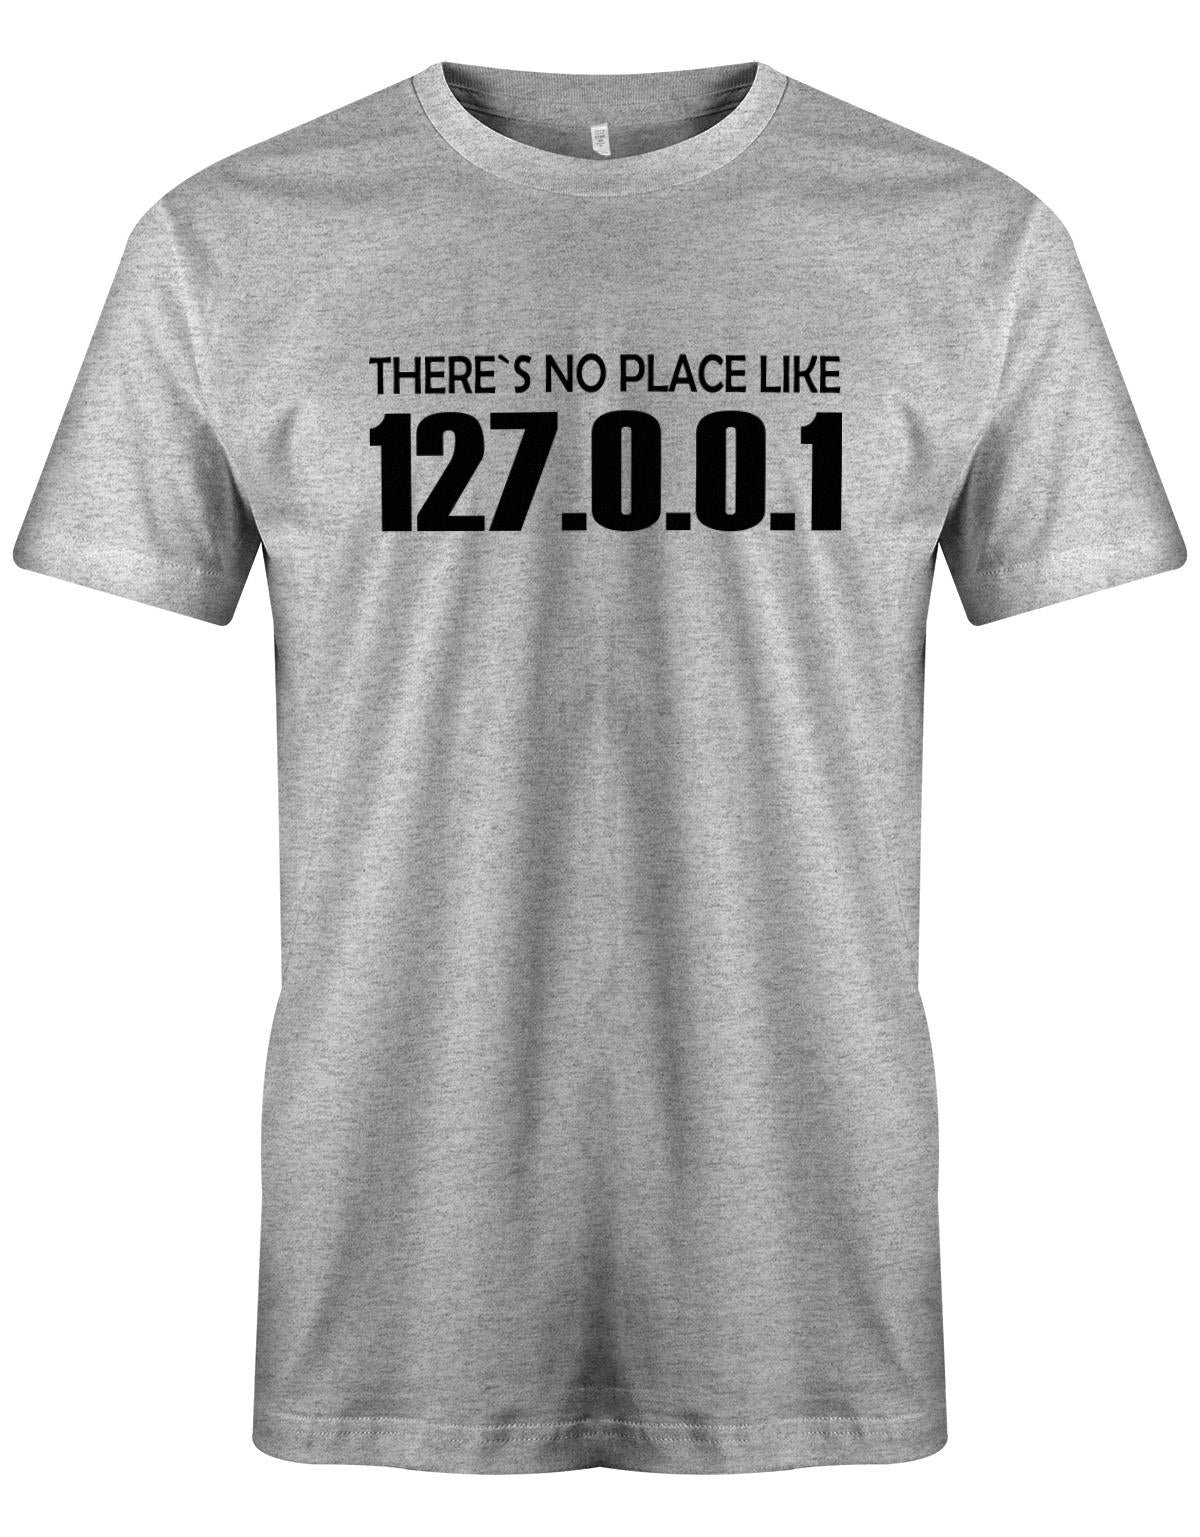 Theres-no-palce-like-127001-Herren-Shirt-Grau